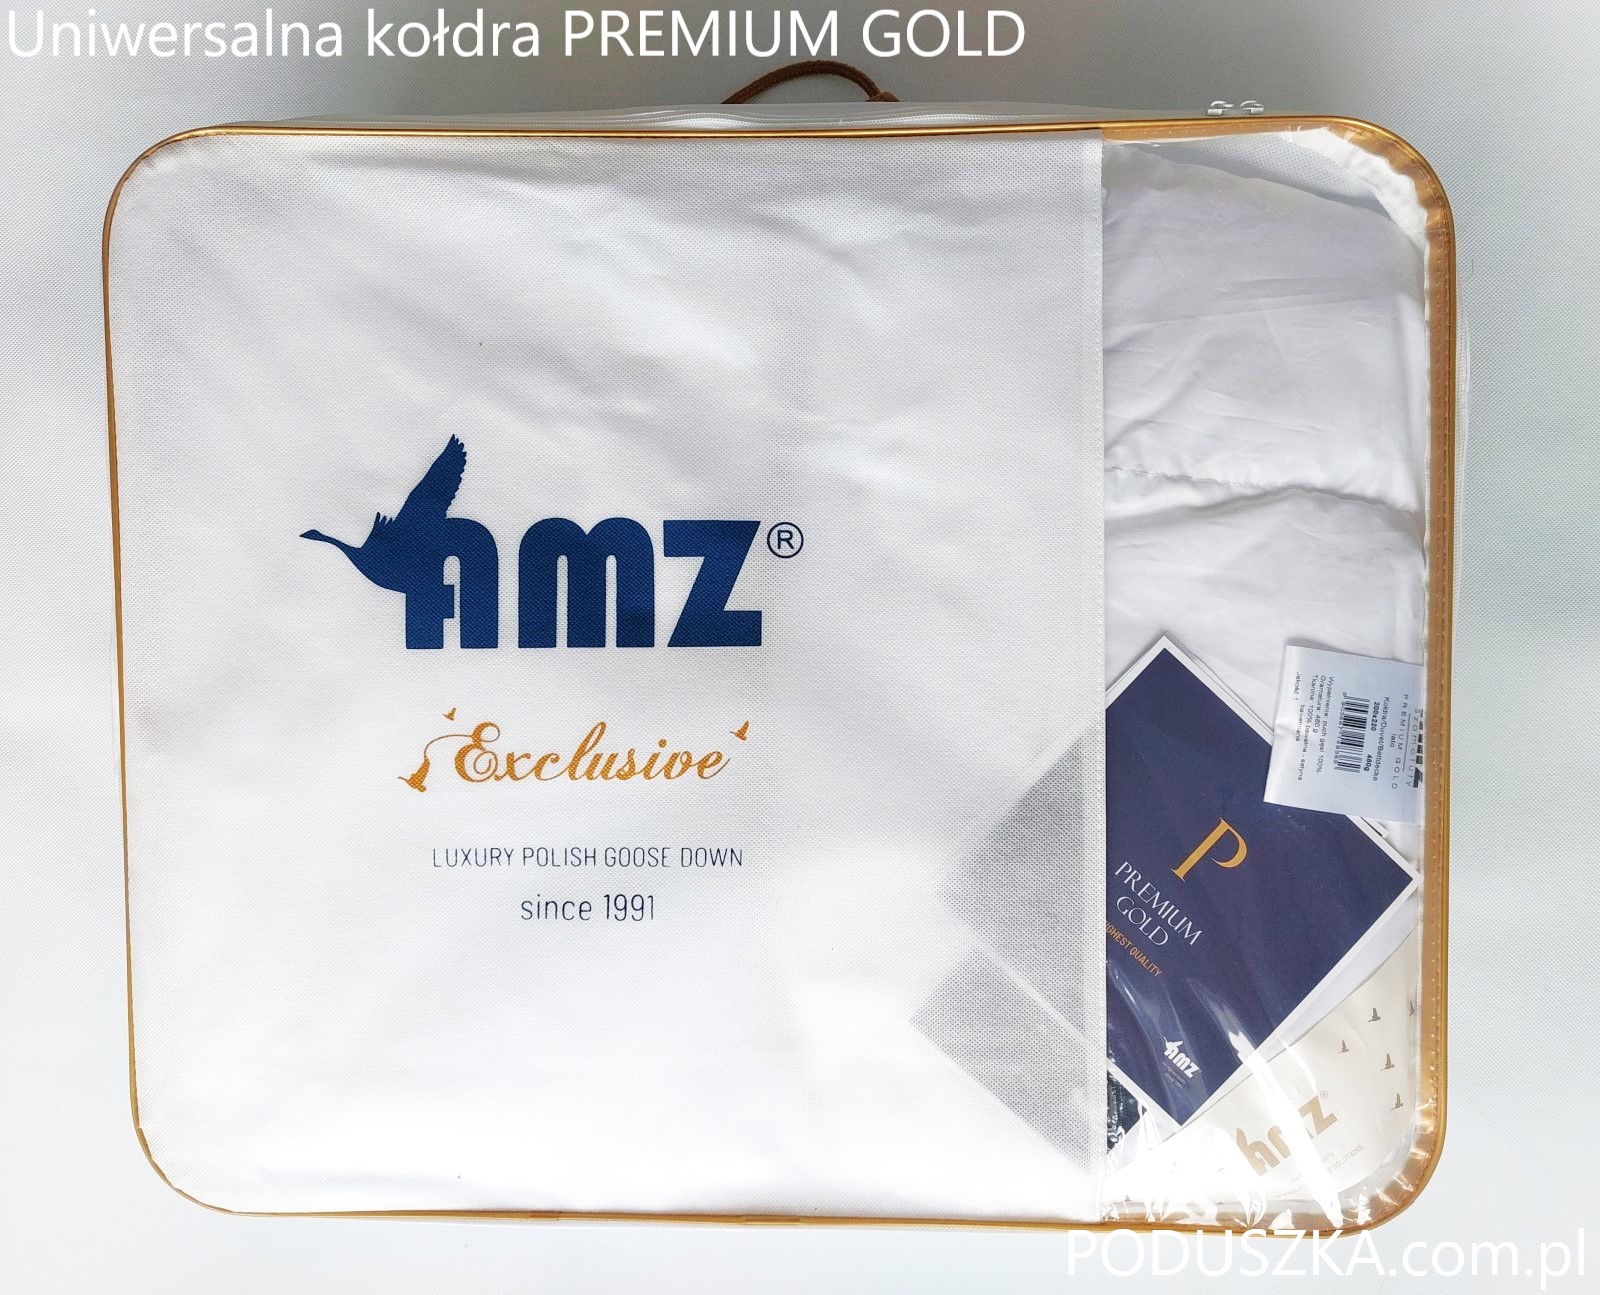 Uniwersalna puchowa koldra Gold Premium